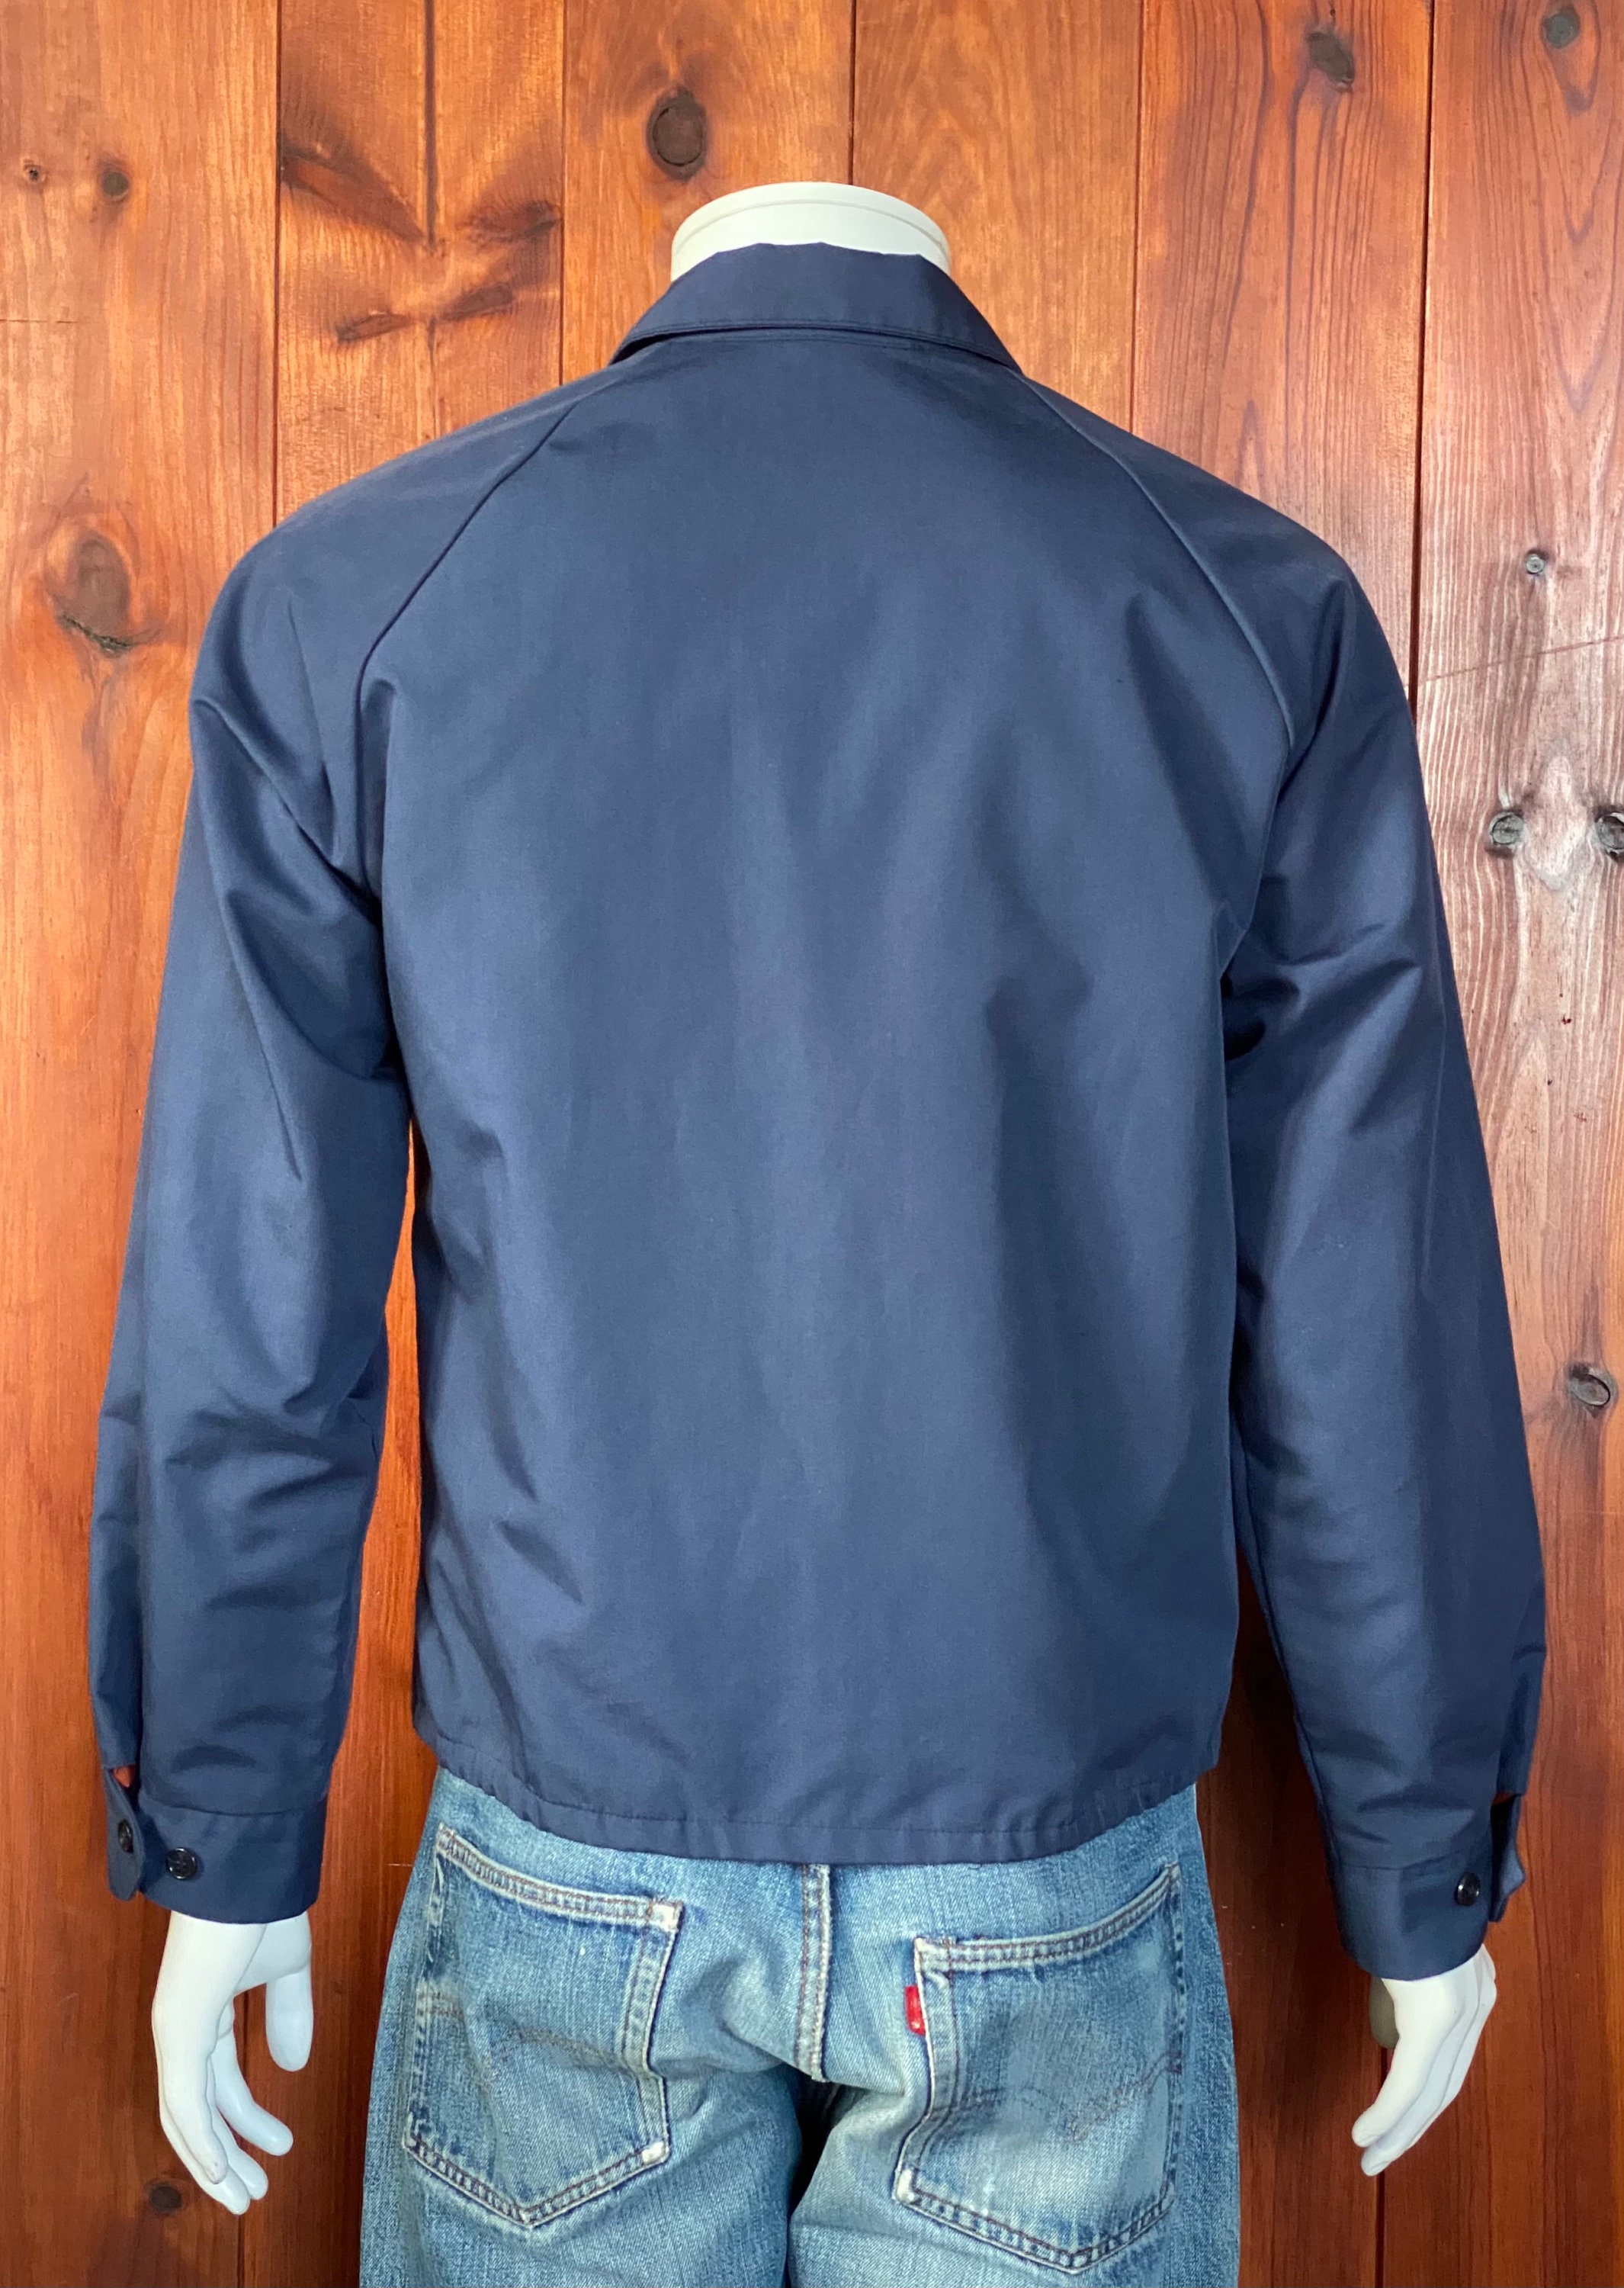 Size M. Vintage 70s Sportsmaster Jacket. Made in USA Baracuta - Etsy